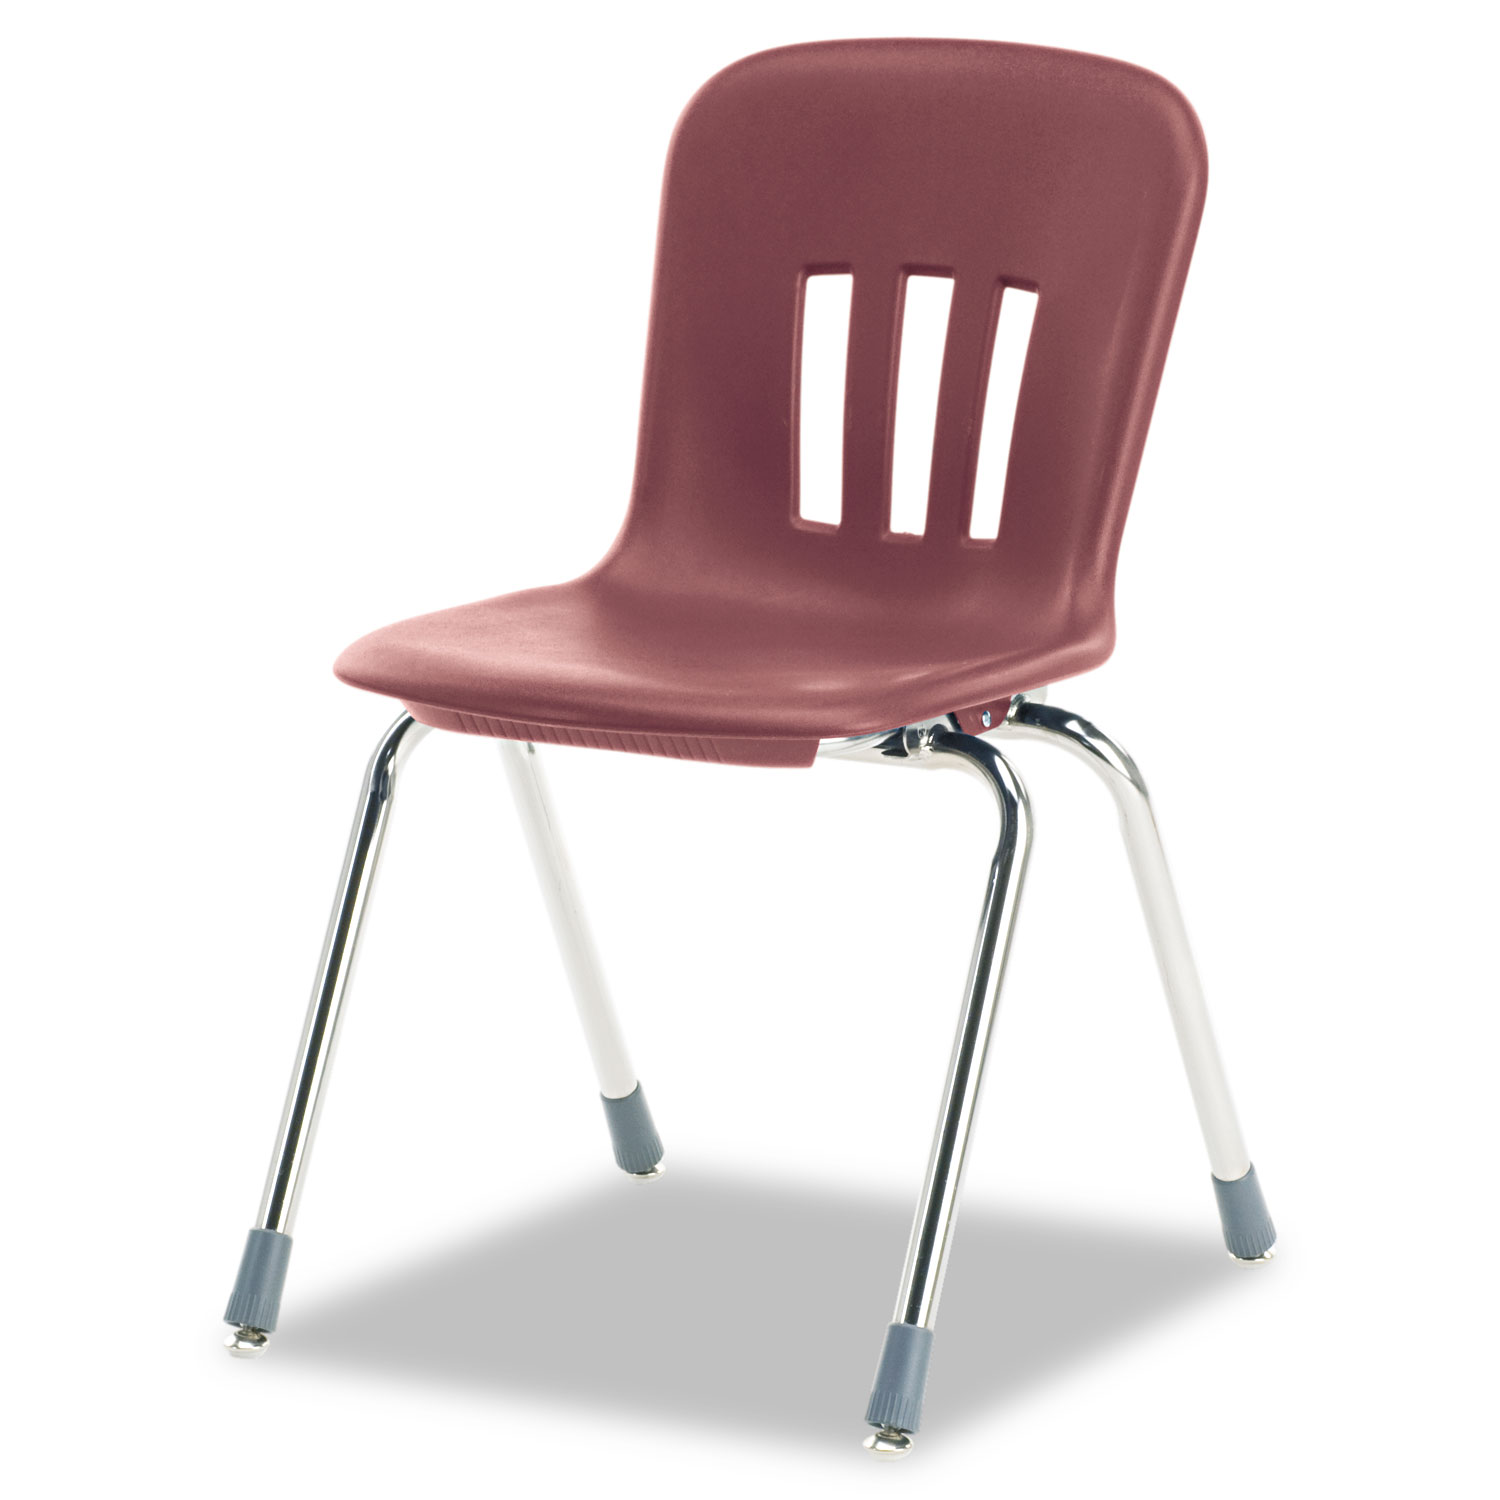 Metaphor Series Classroom Chair, 18 Seat Height, Wine/Chrome, 4/Carton